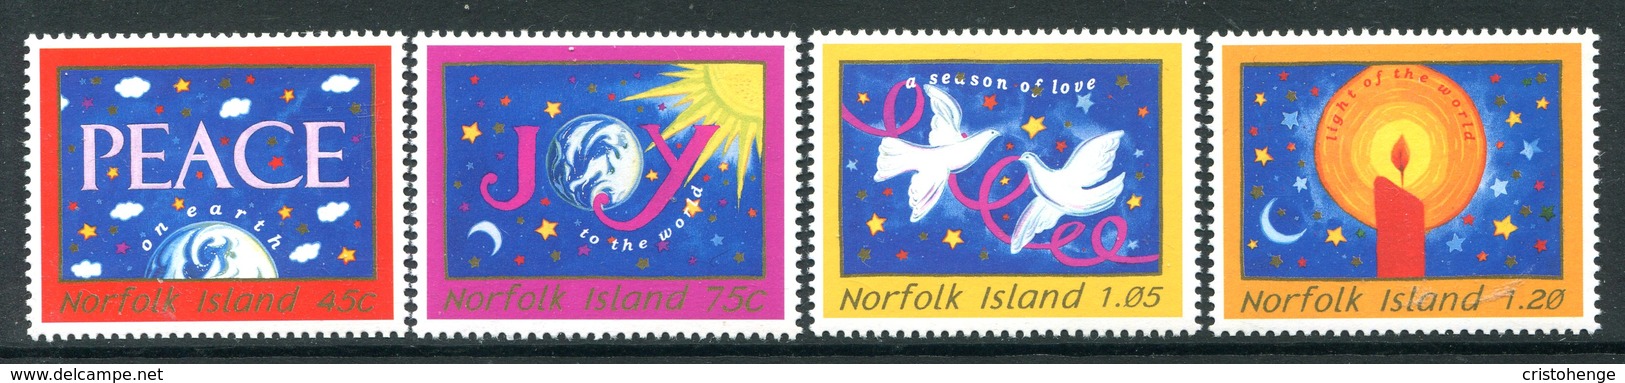 Norfolk Island 1998 Christmas Set MNH (SG 686-689) - Norfolk Island